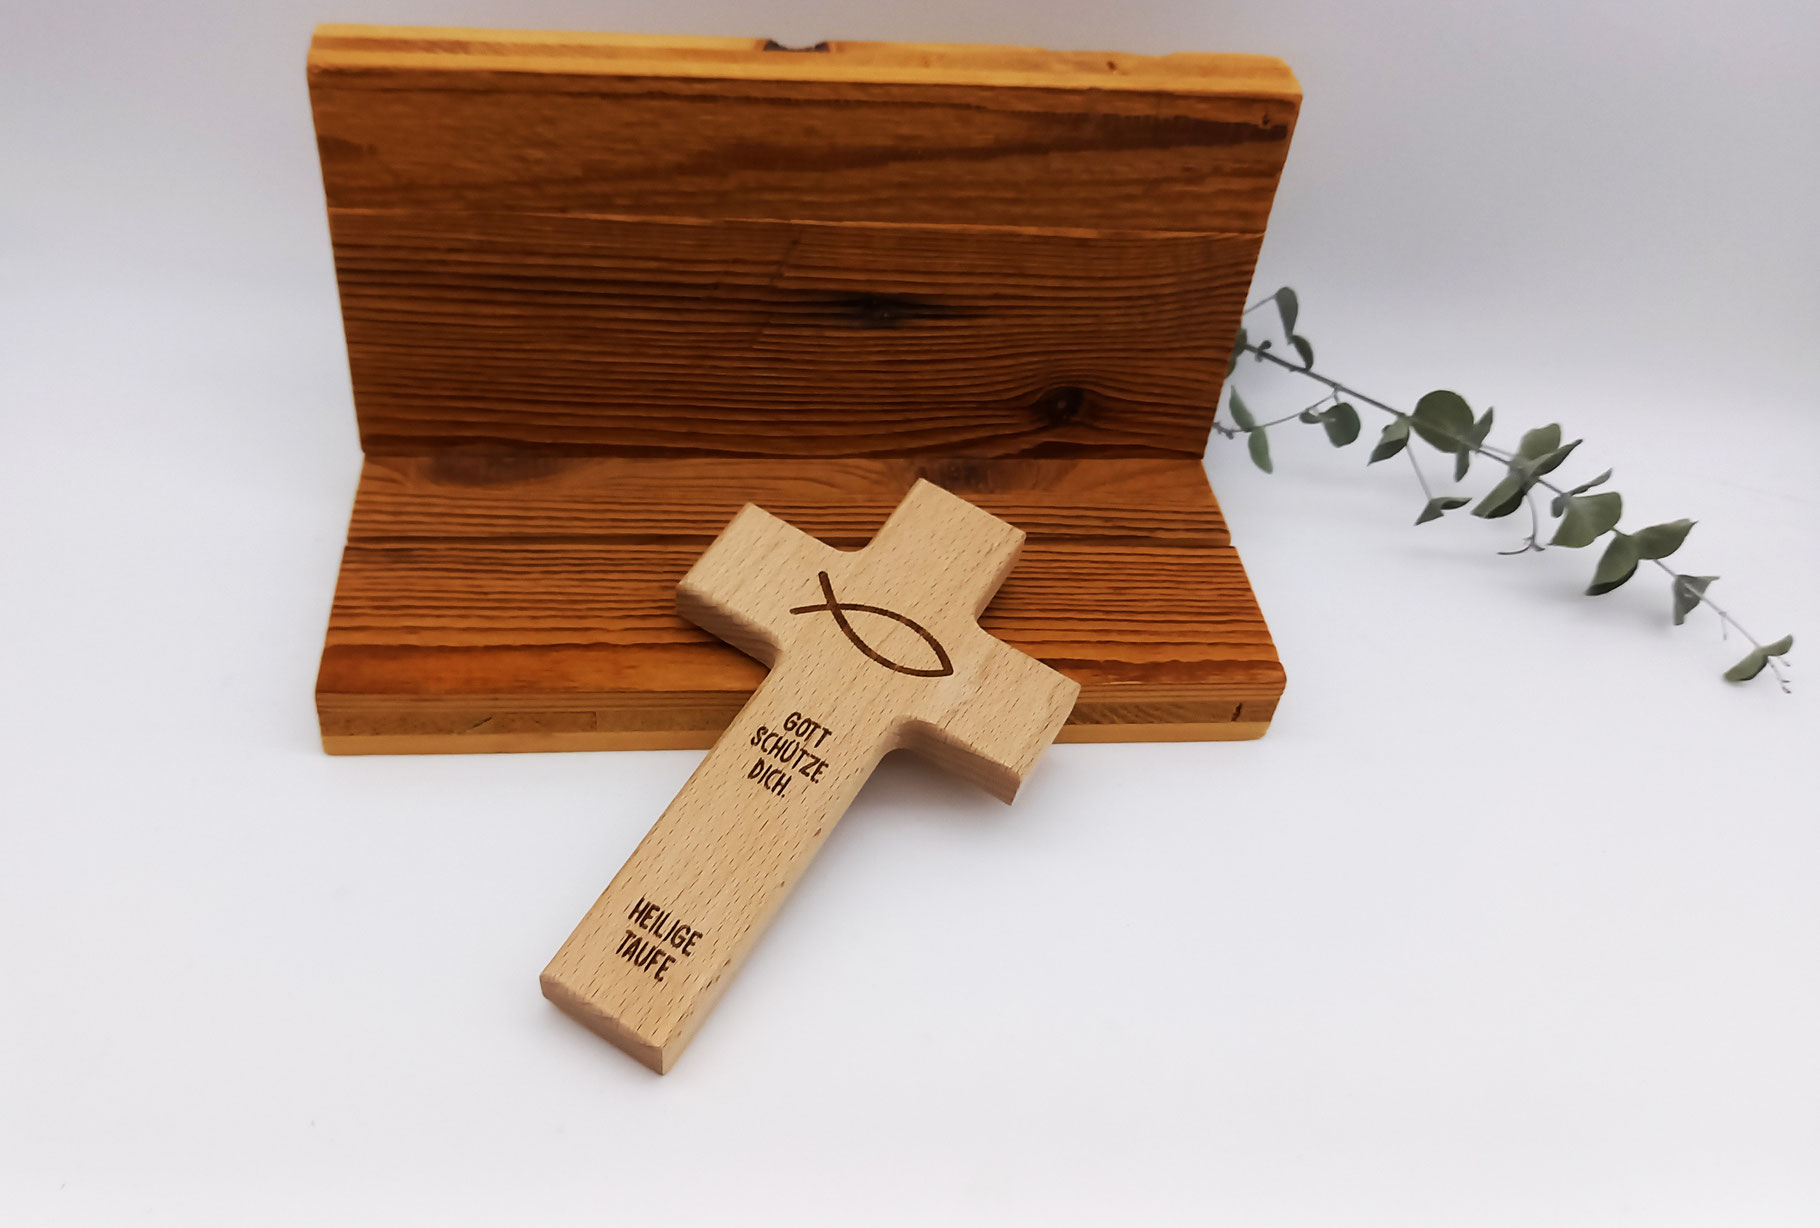 Taufkreuz, Erstkommunion Kreuz, Holz Kreuz zum Aufhängen